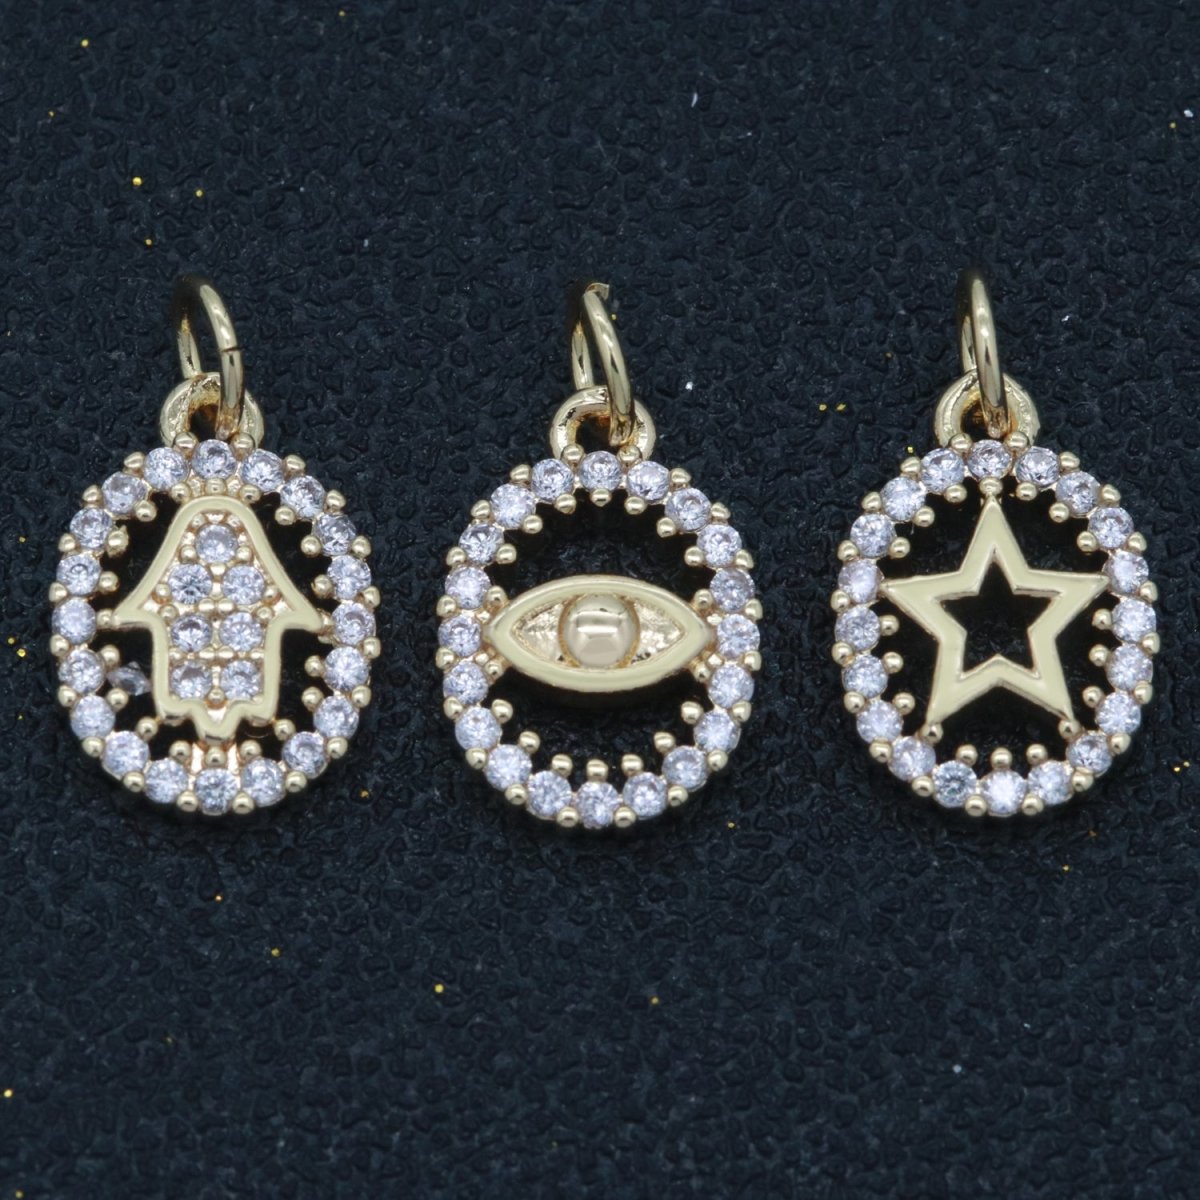 Dainty 18k Gold Filled Hamsa Hand / Evil Eye / Star Charm Micro Pave Mini Medallion Pendant for bracelet necklace earring Minimalist Jewelry M-750 - M-752 - DLUXCA